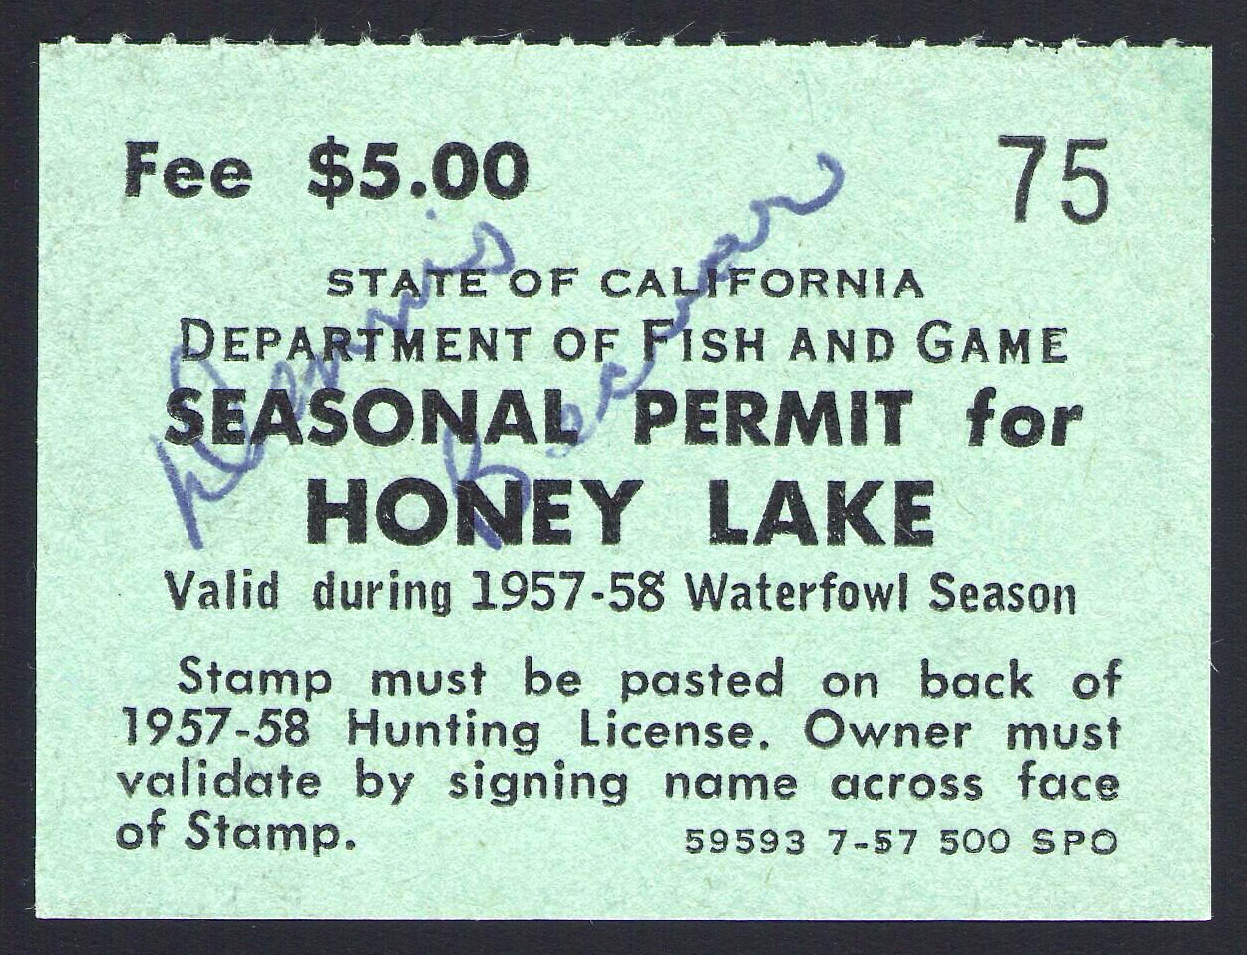 1956-57 Honey Lake Waterfowl